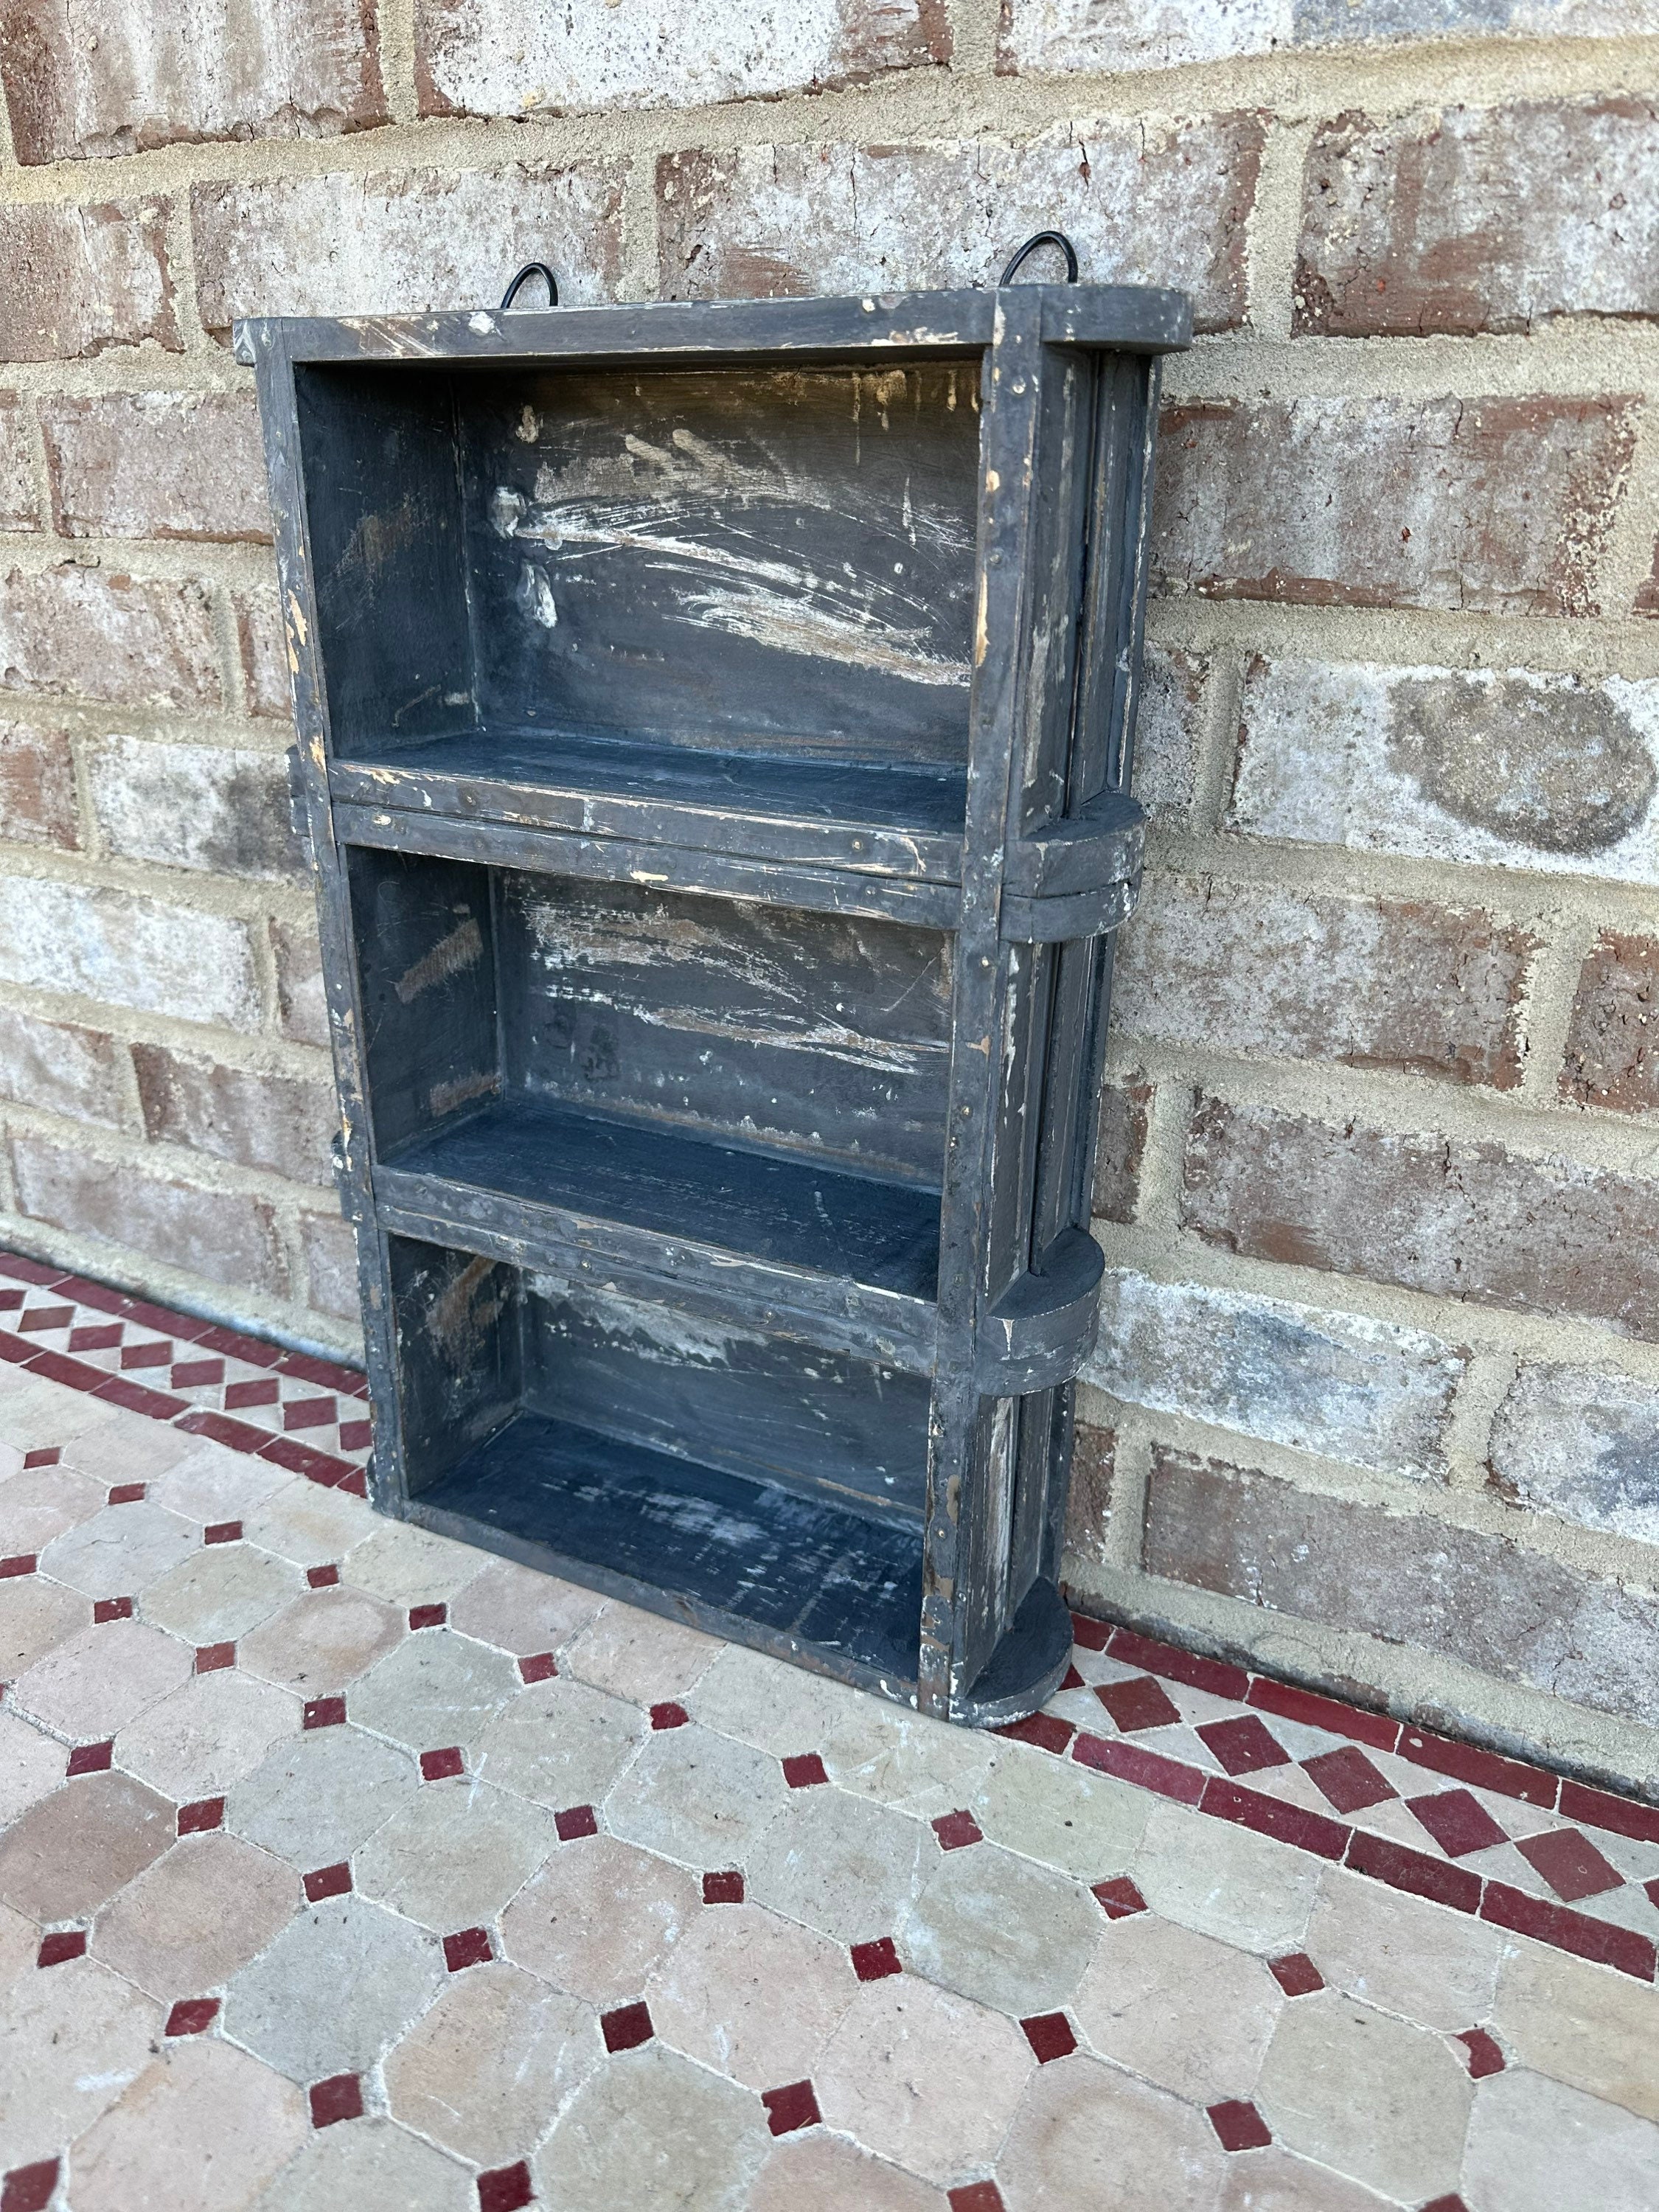 Single Rustic Wood Brick Mold, Farmhouse Brick Mould Box Shelf